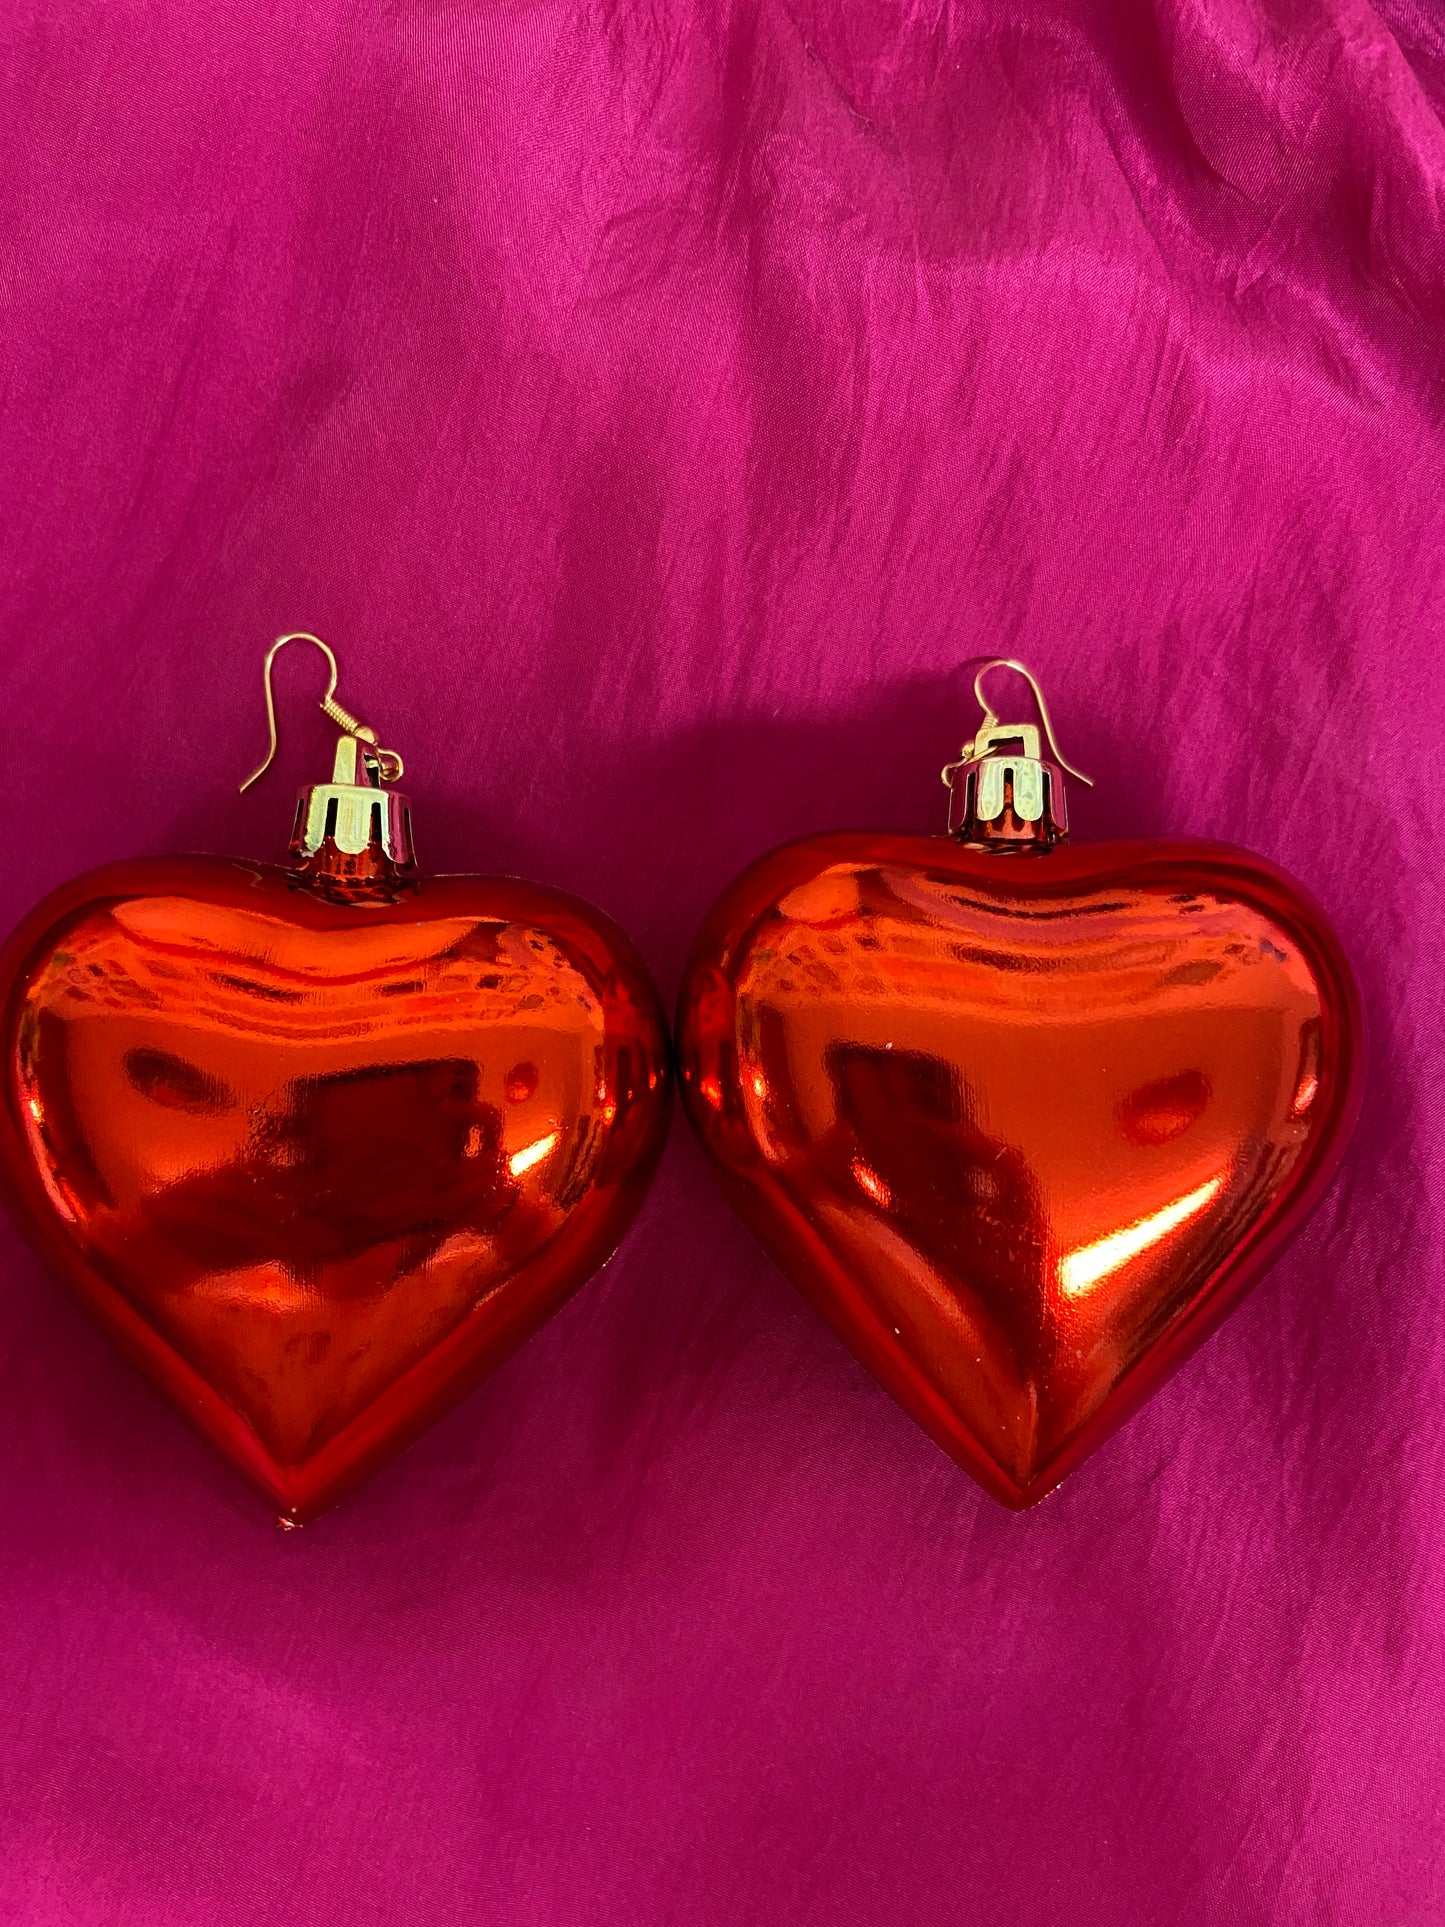 Jumbo heart earrings